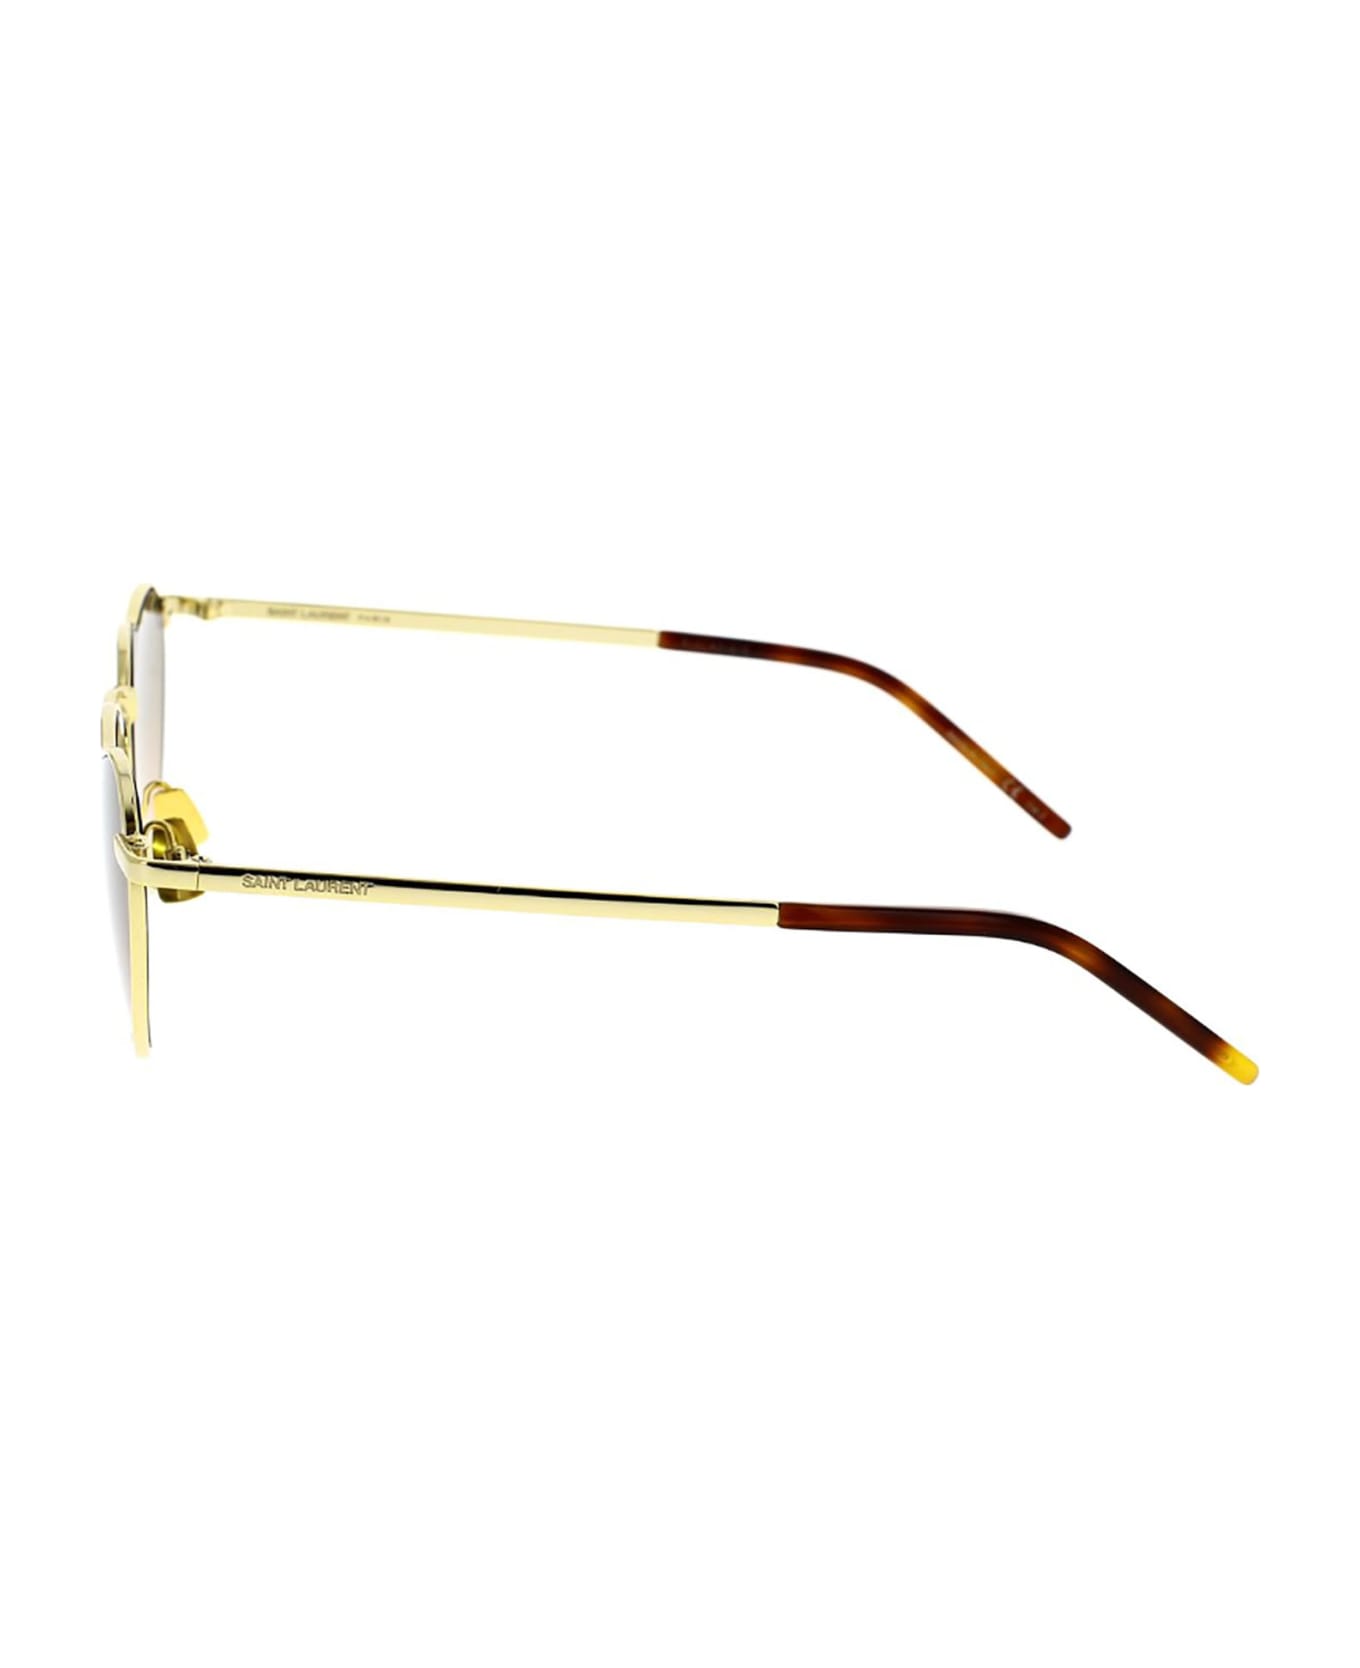 Saint Laurent Eyewear Sl 301 Loulou Sunglasses - 015 gold gold brown